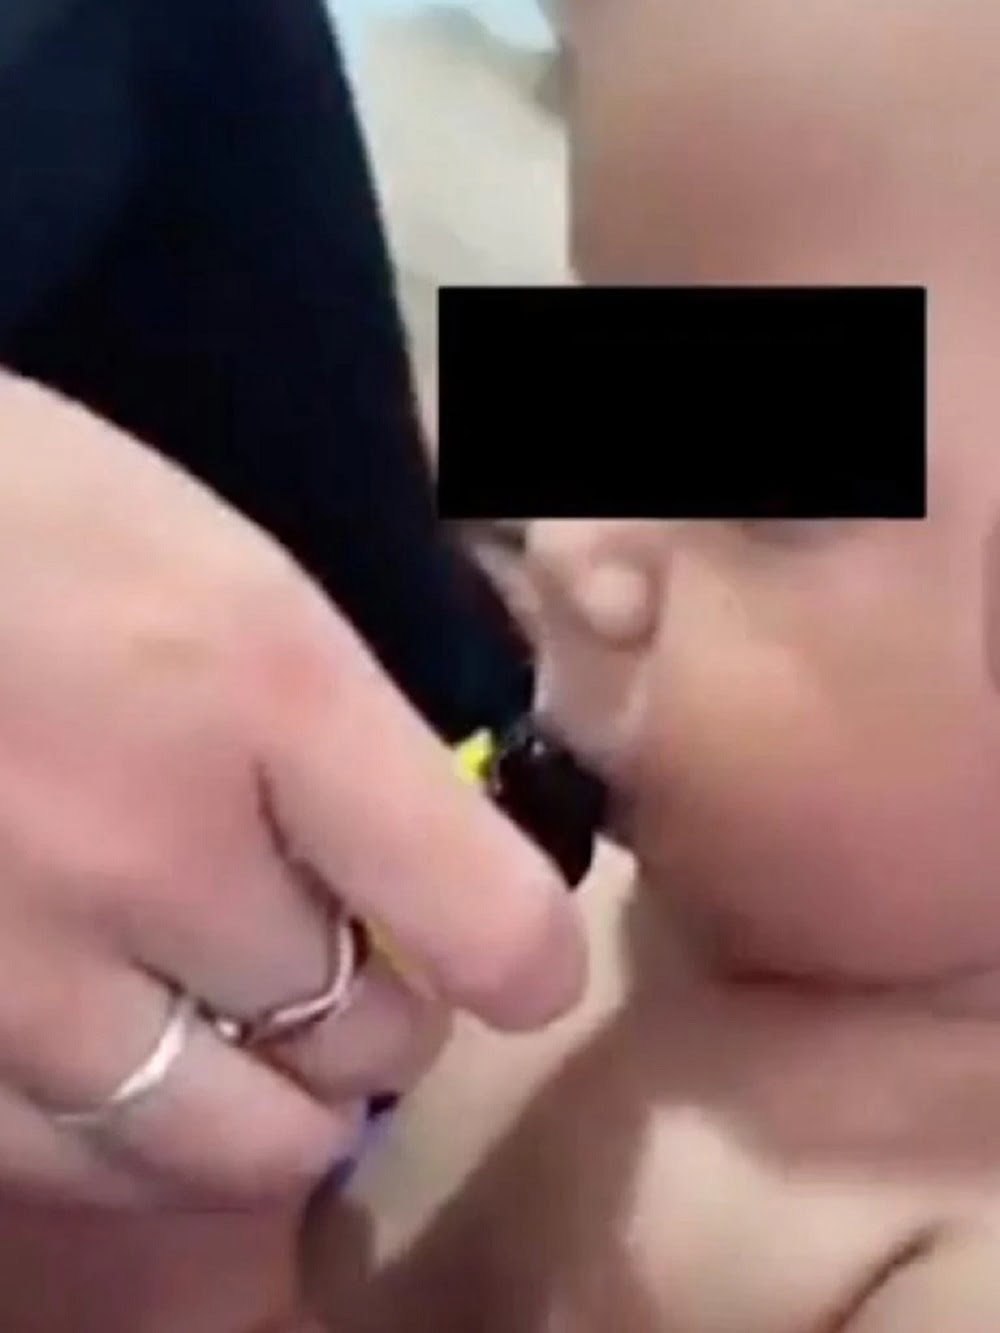 Baby Vaping Viral Video